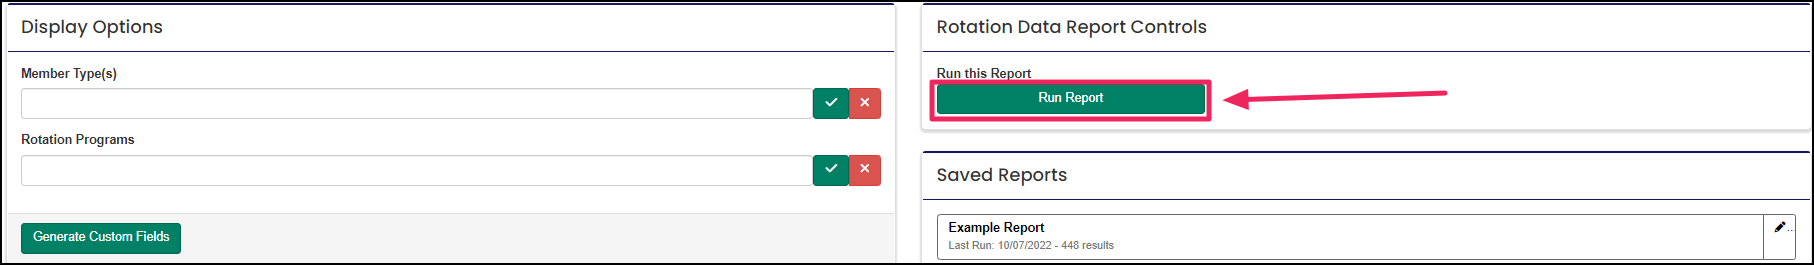 Image shows run report button.